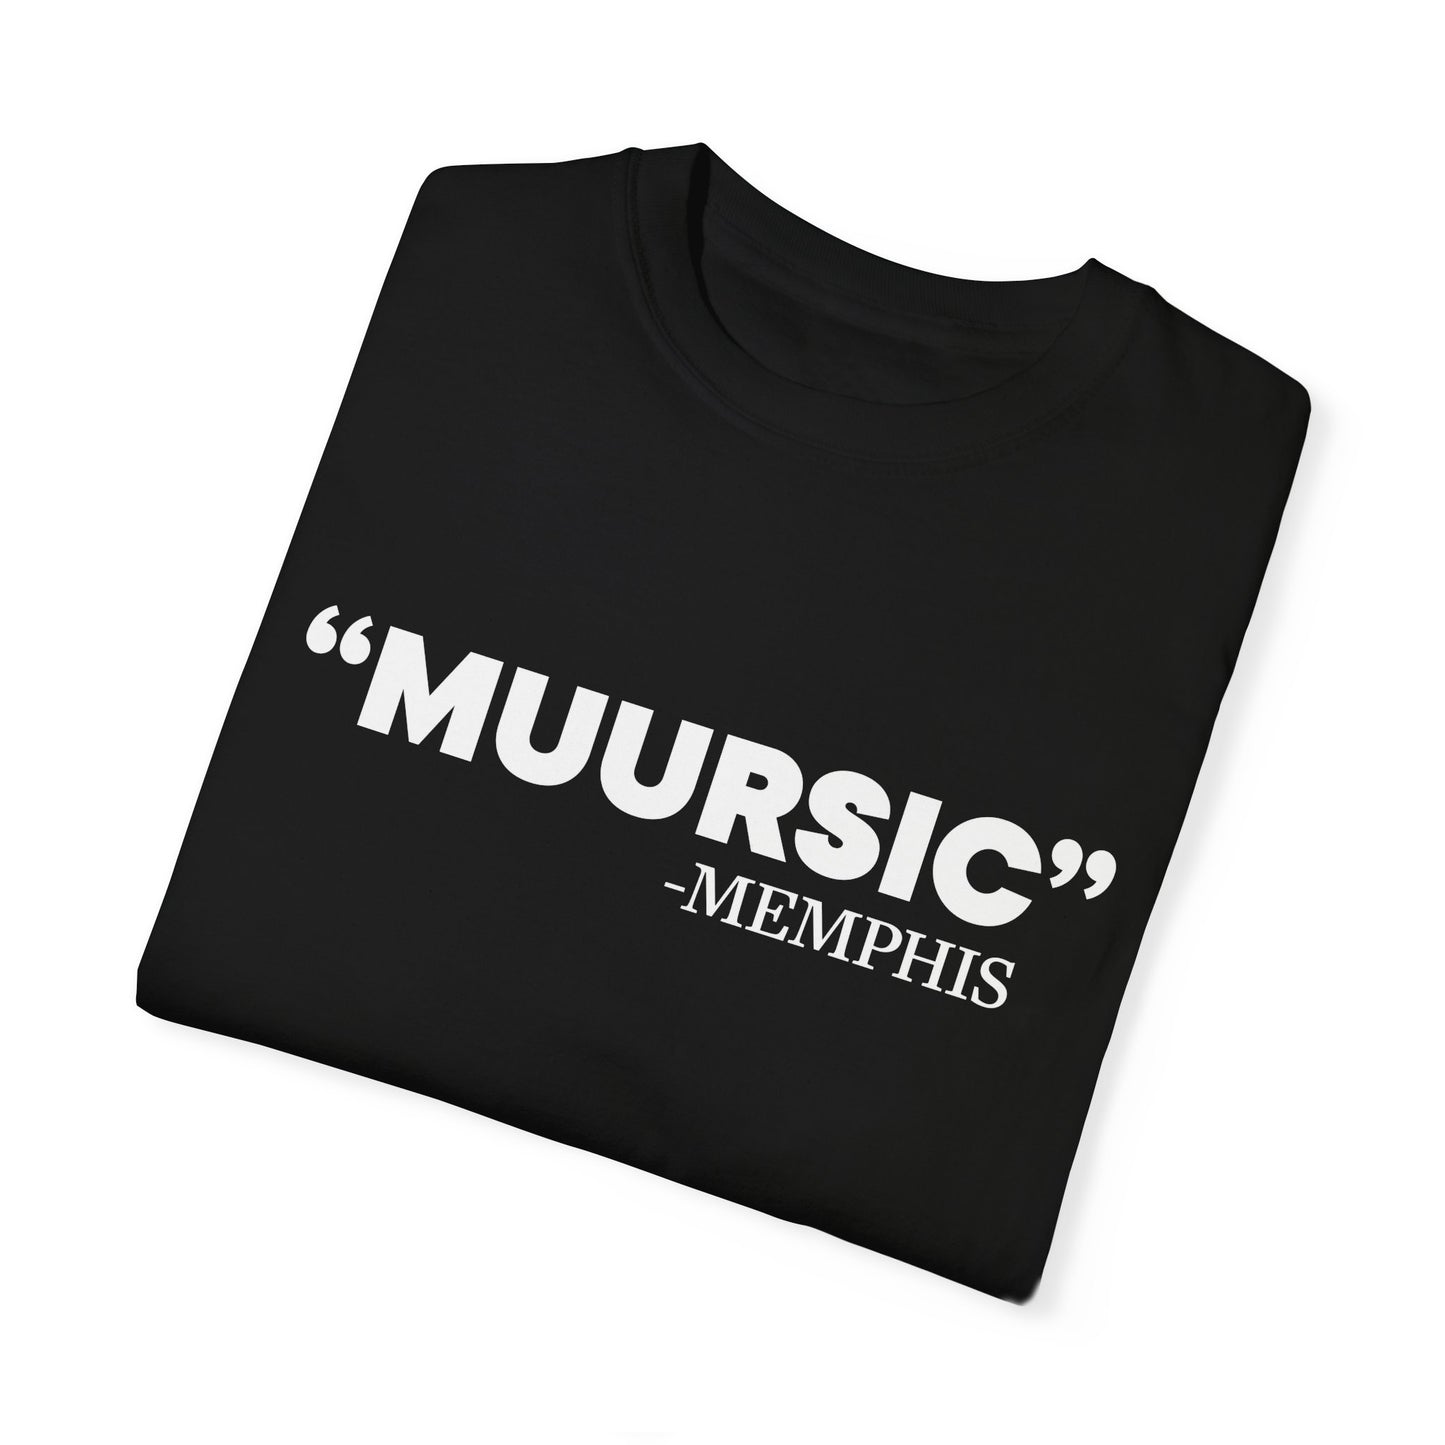 Muursic - Memphis T- Shirt